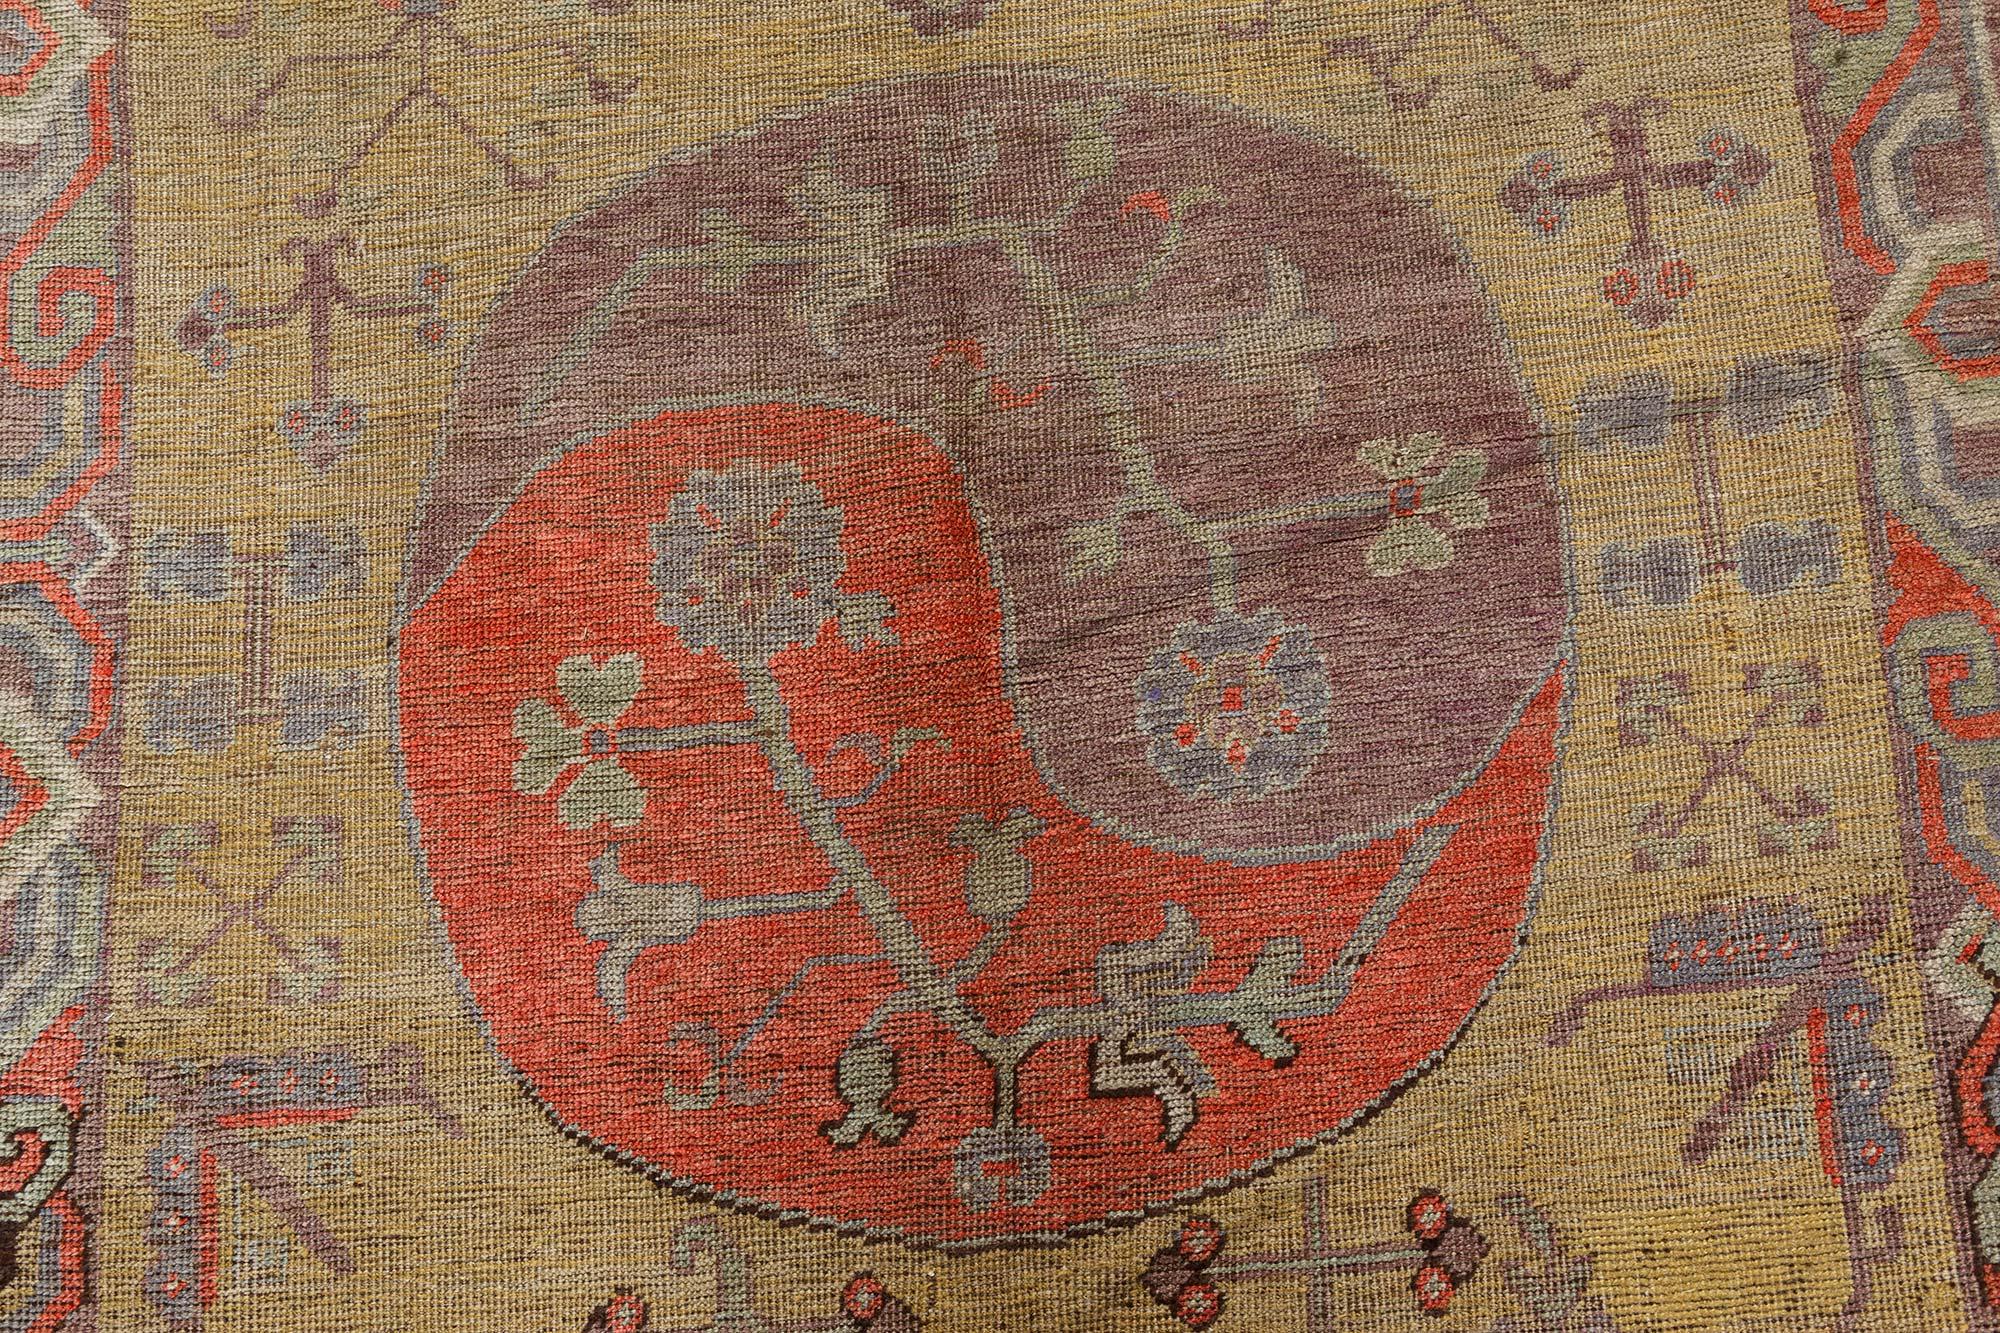 Vintage Samarkand (Khotan) green handmade wool carpet.
Size: 4'9